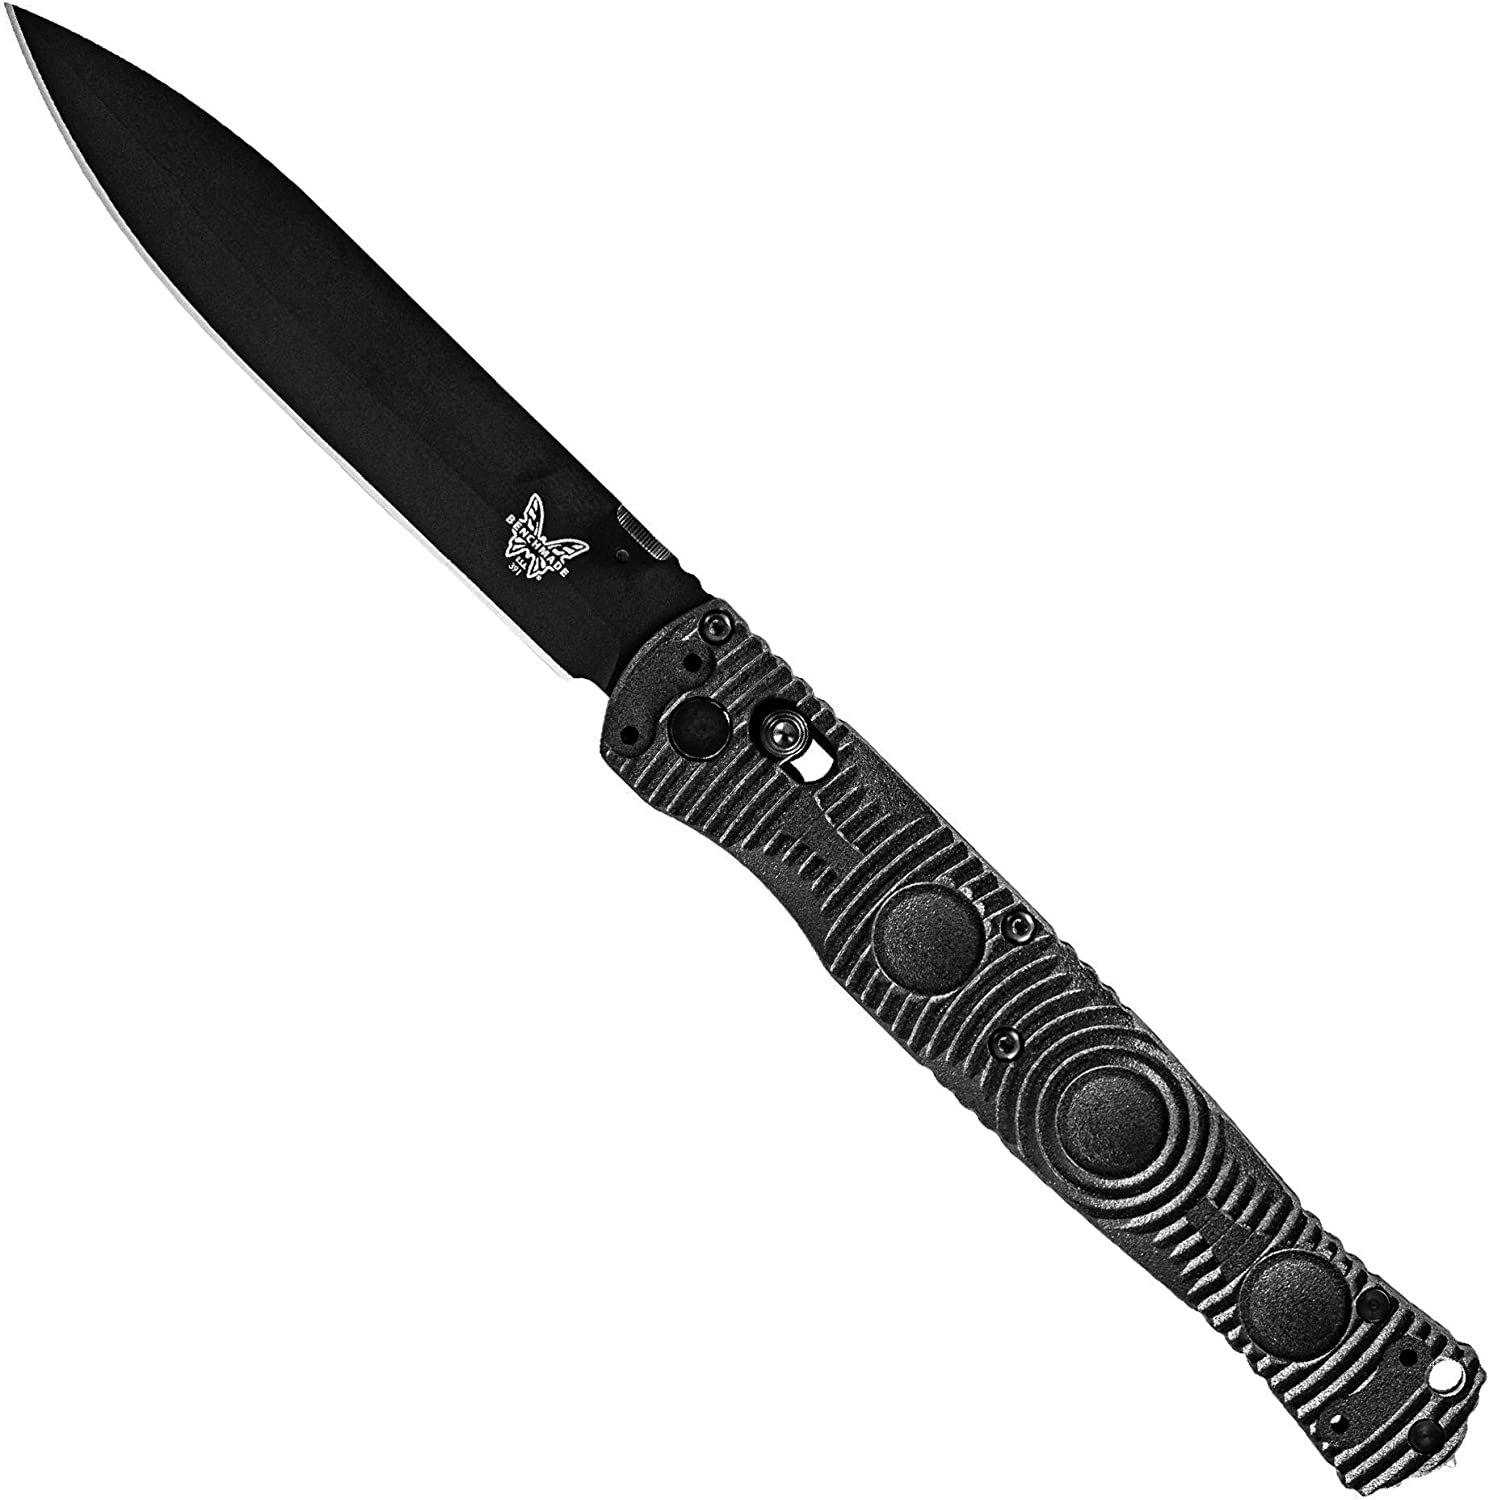 Benchmade – 391BK SOCP Tactical Folder, Spear Point Plain Edge, Glass Breaker Knife, Made in the USA